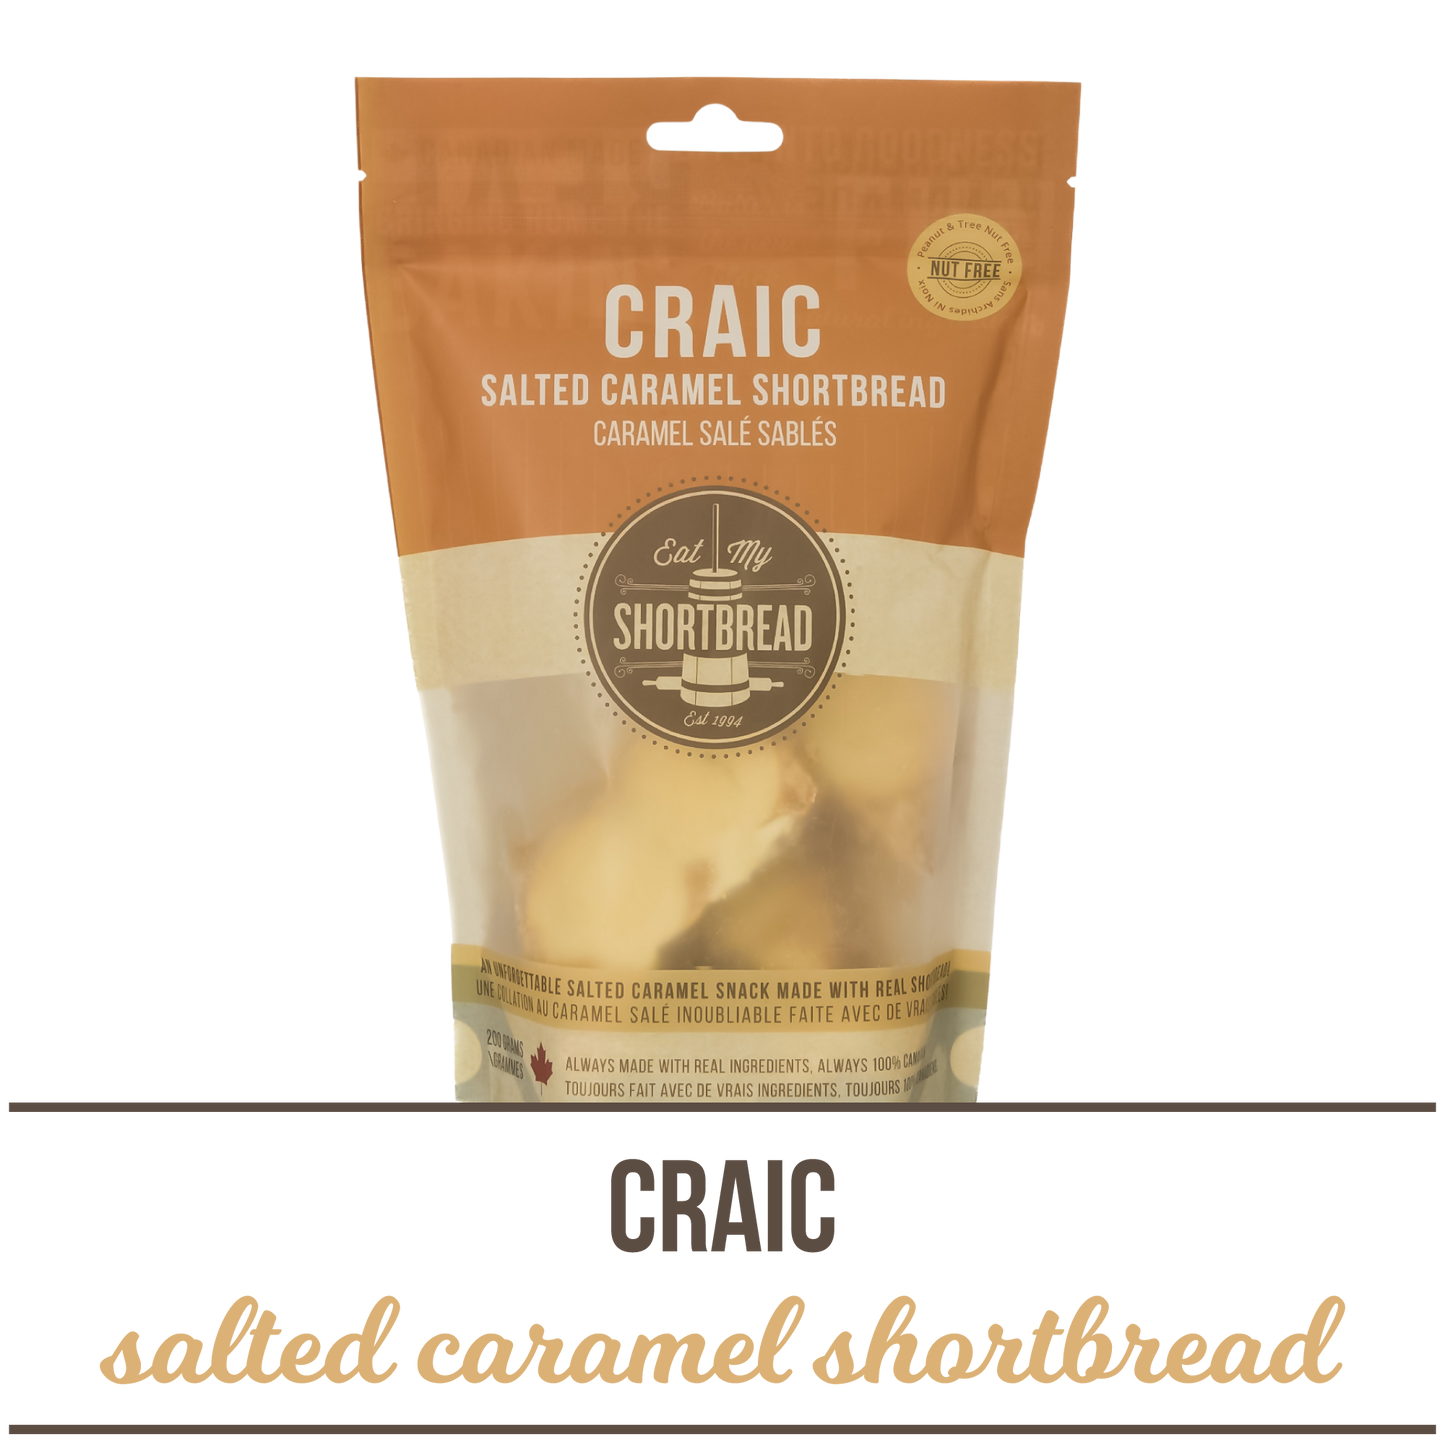 Craic: The Salted Caramel Shortbread Snack!